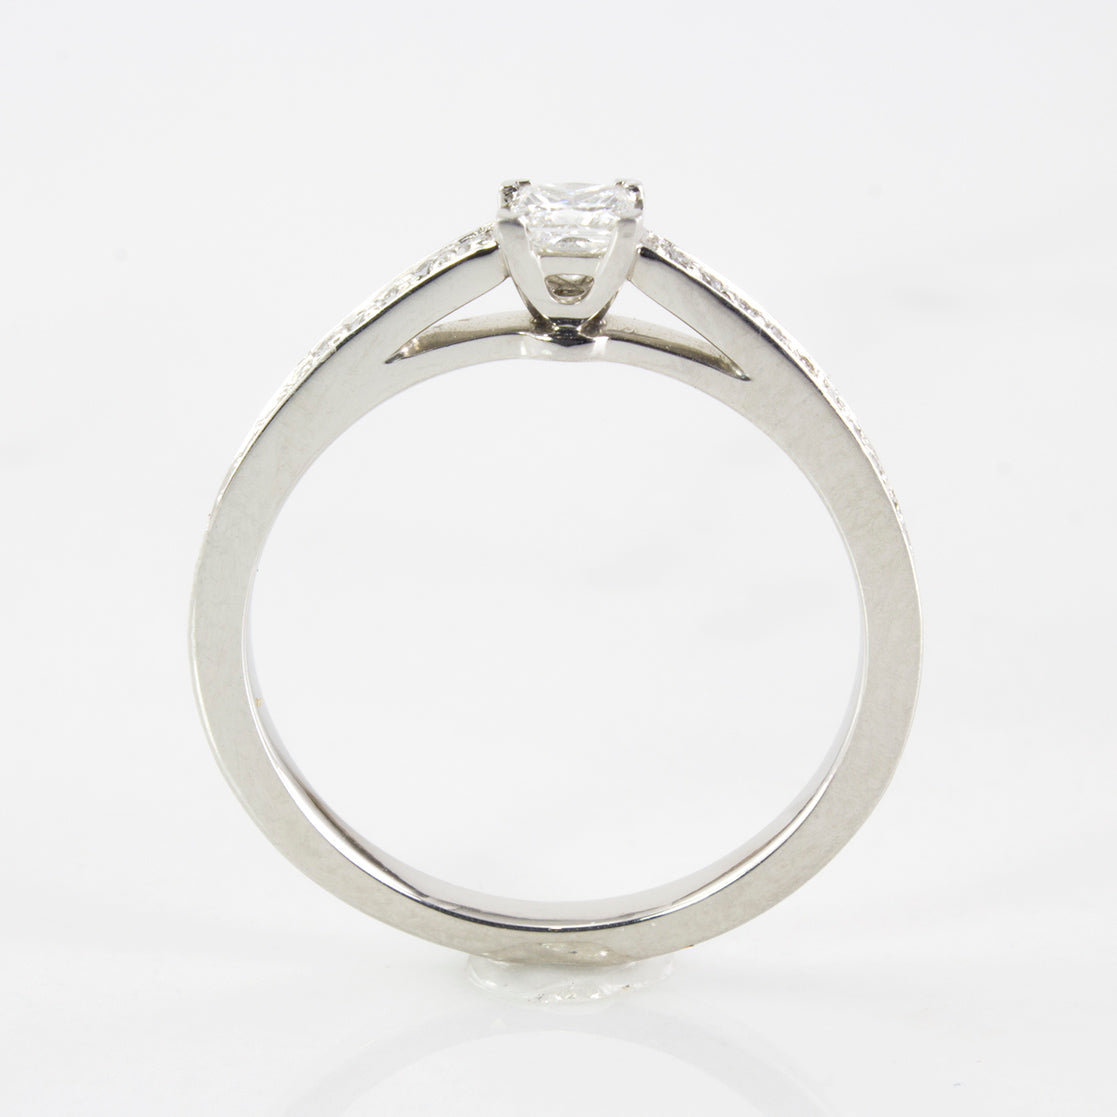 'Tiffany & Co.' Platinum Diamond Ring | 0.27 ctw | SZ 5 |